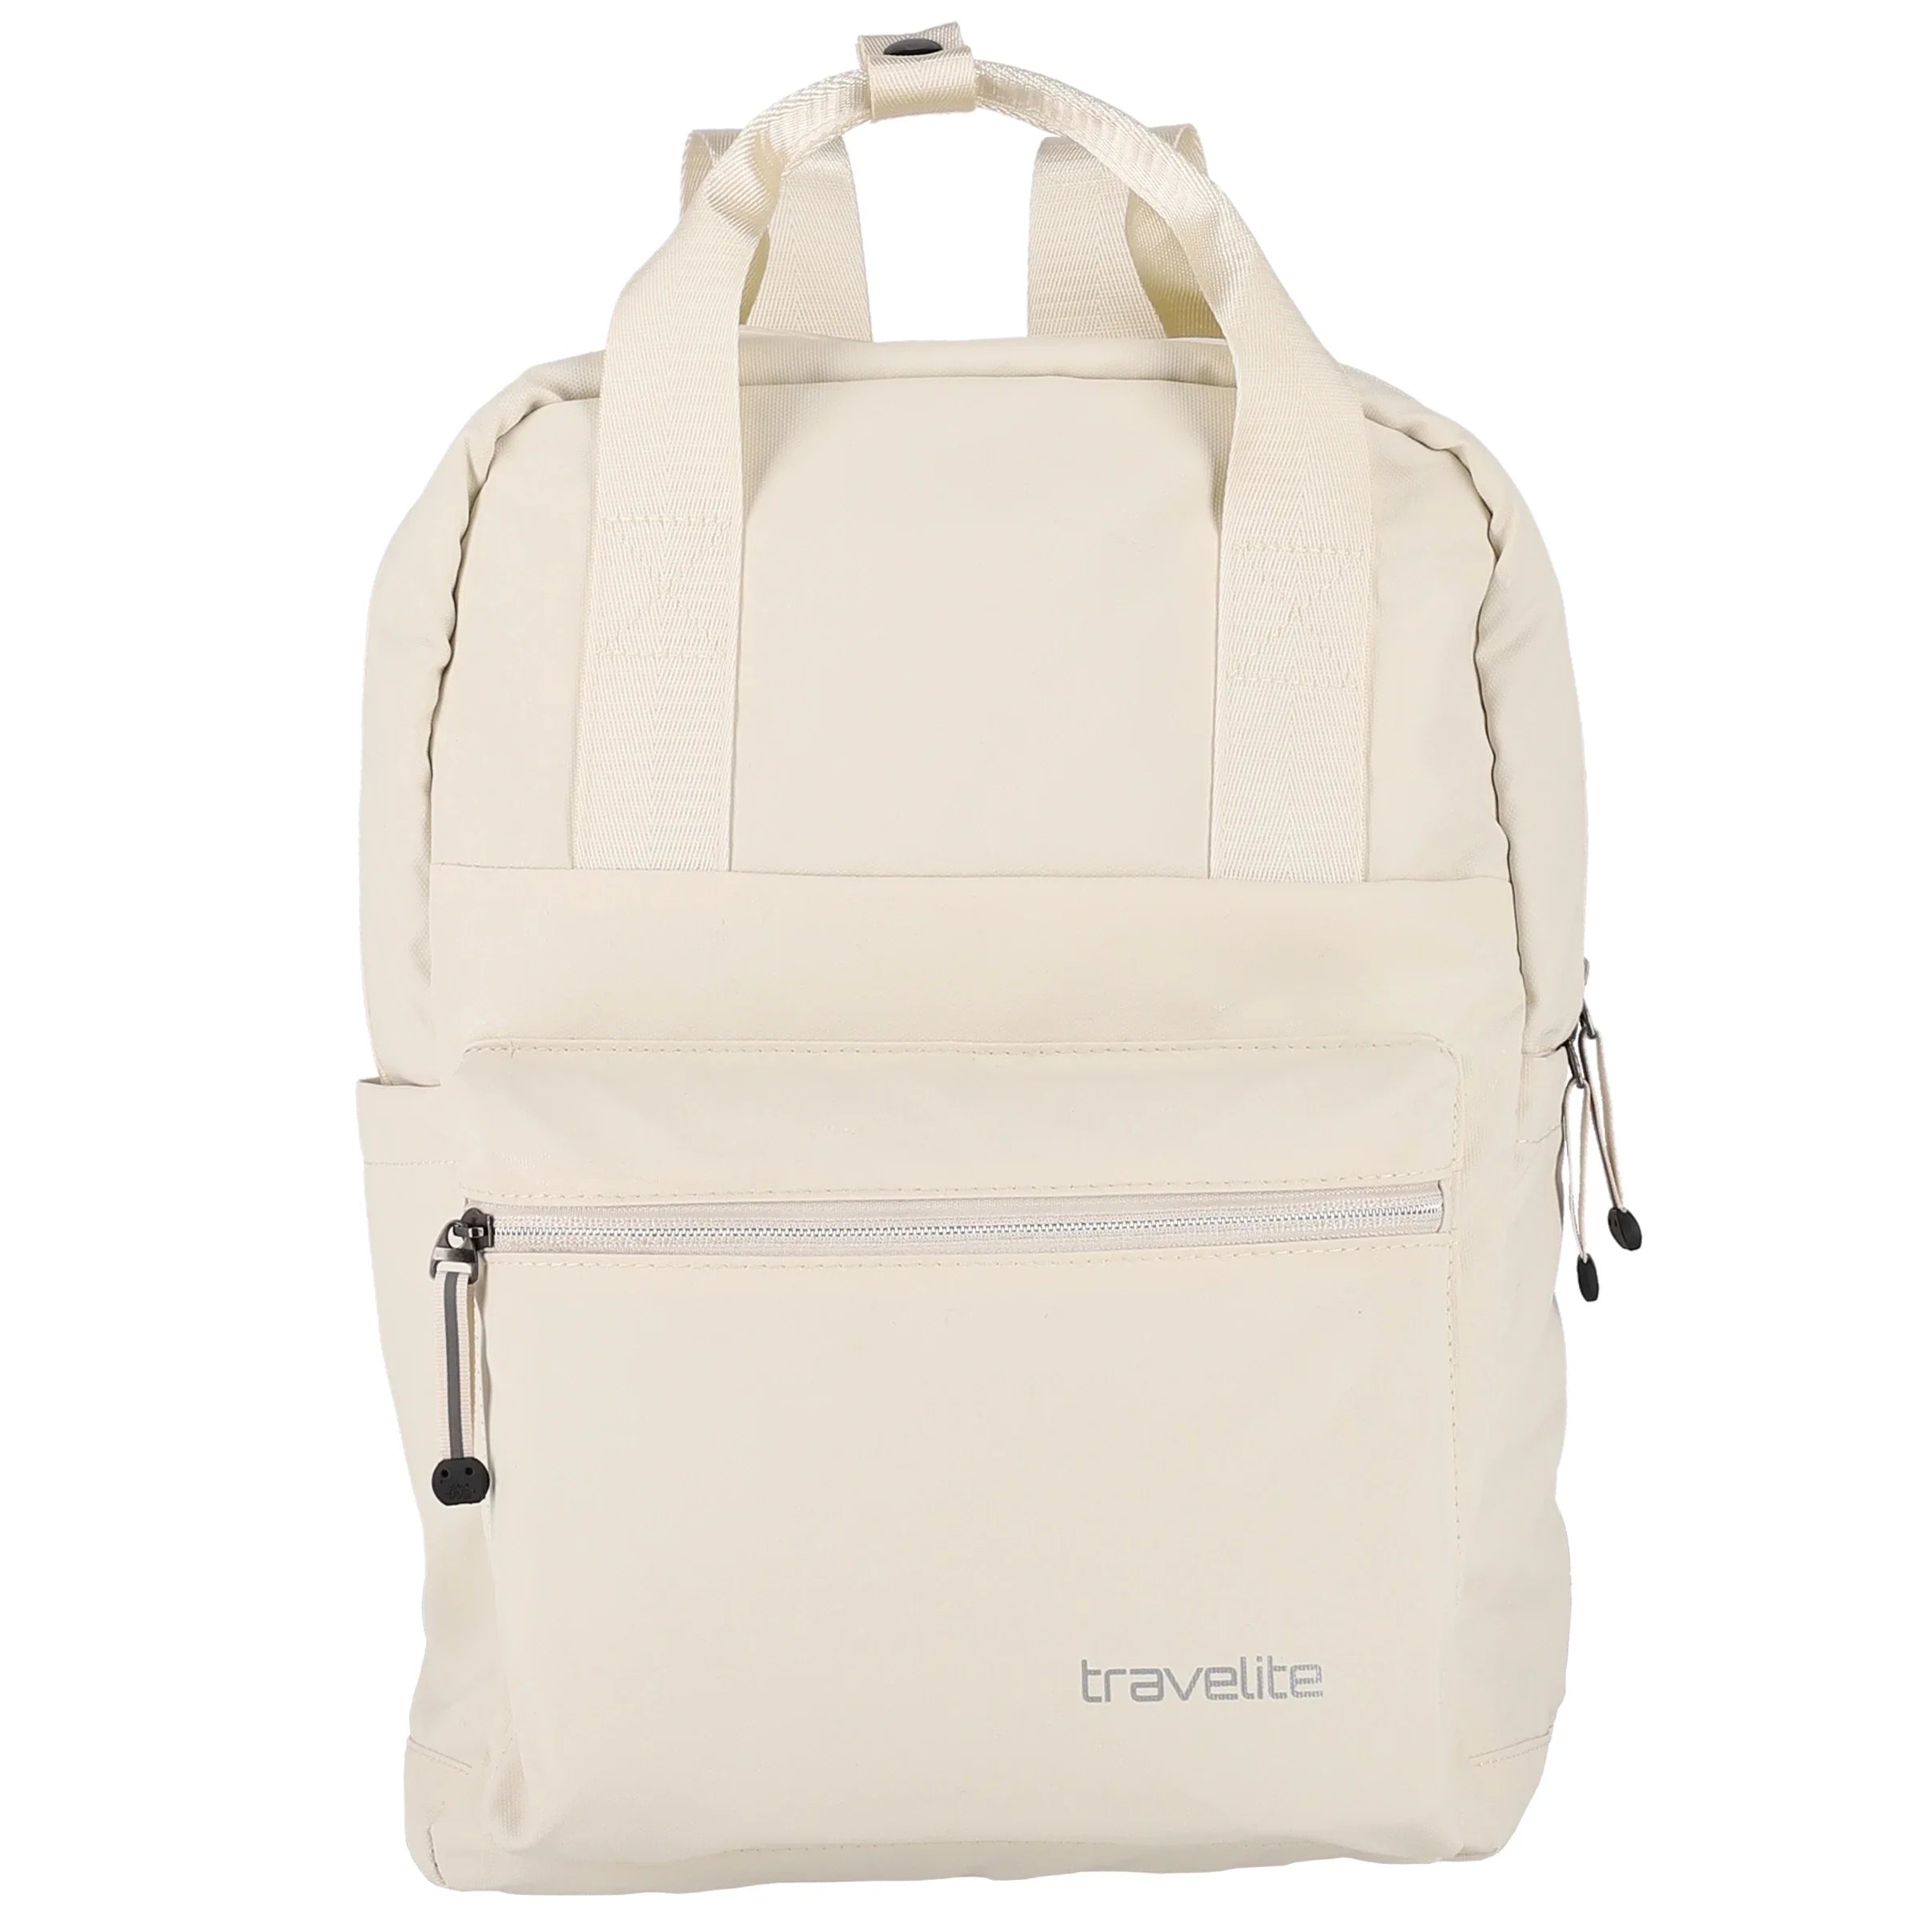 Travelite Basics sac à dos bâche 39 cm - beige clair